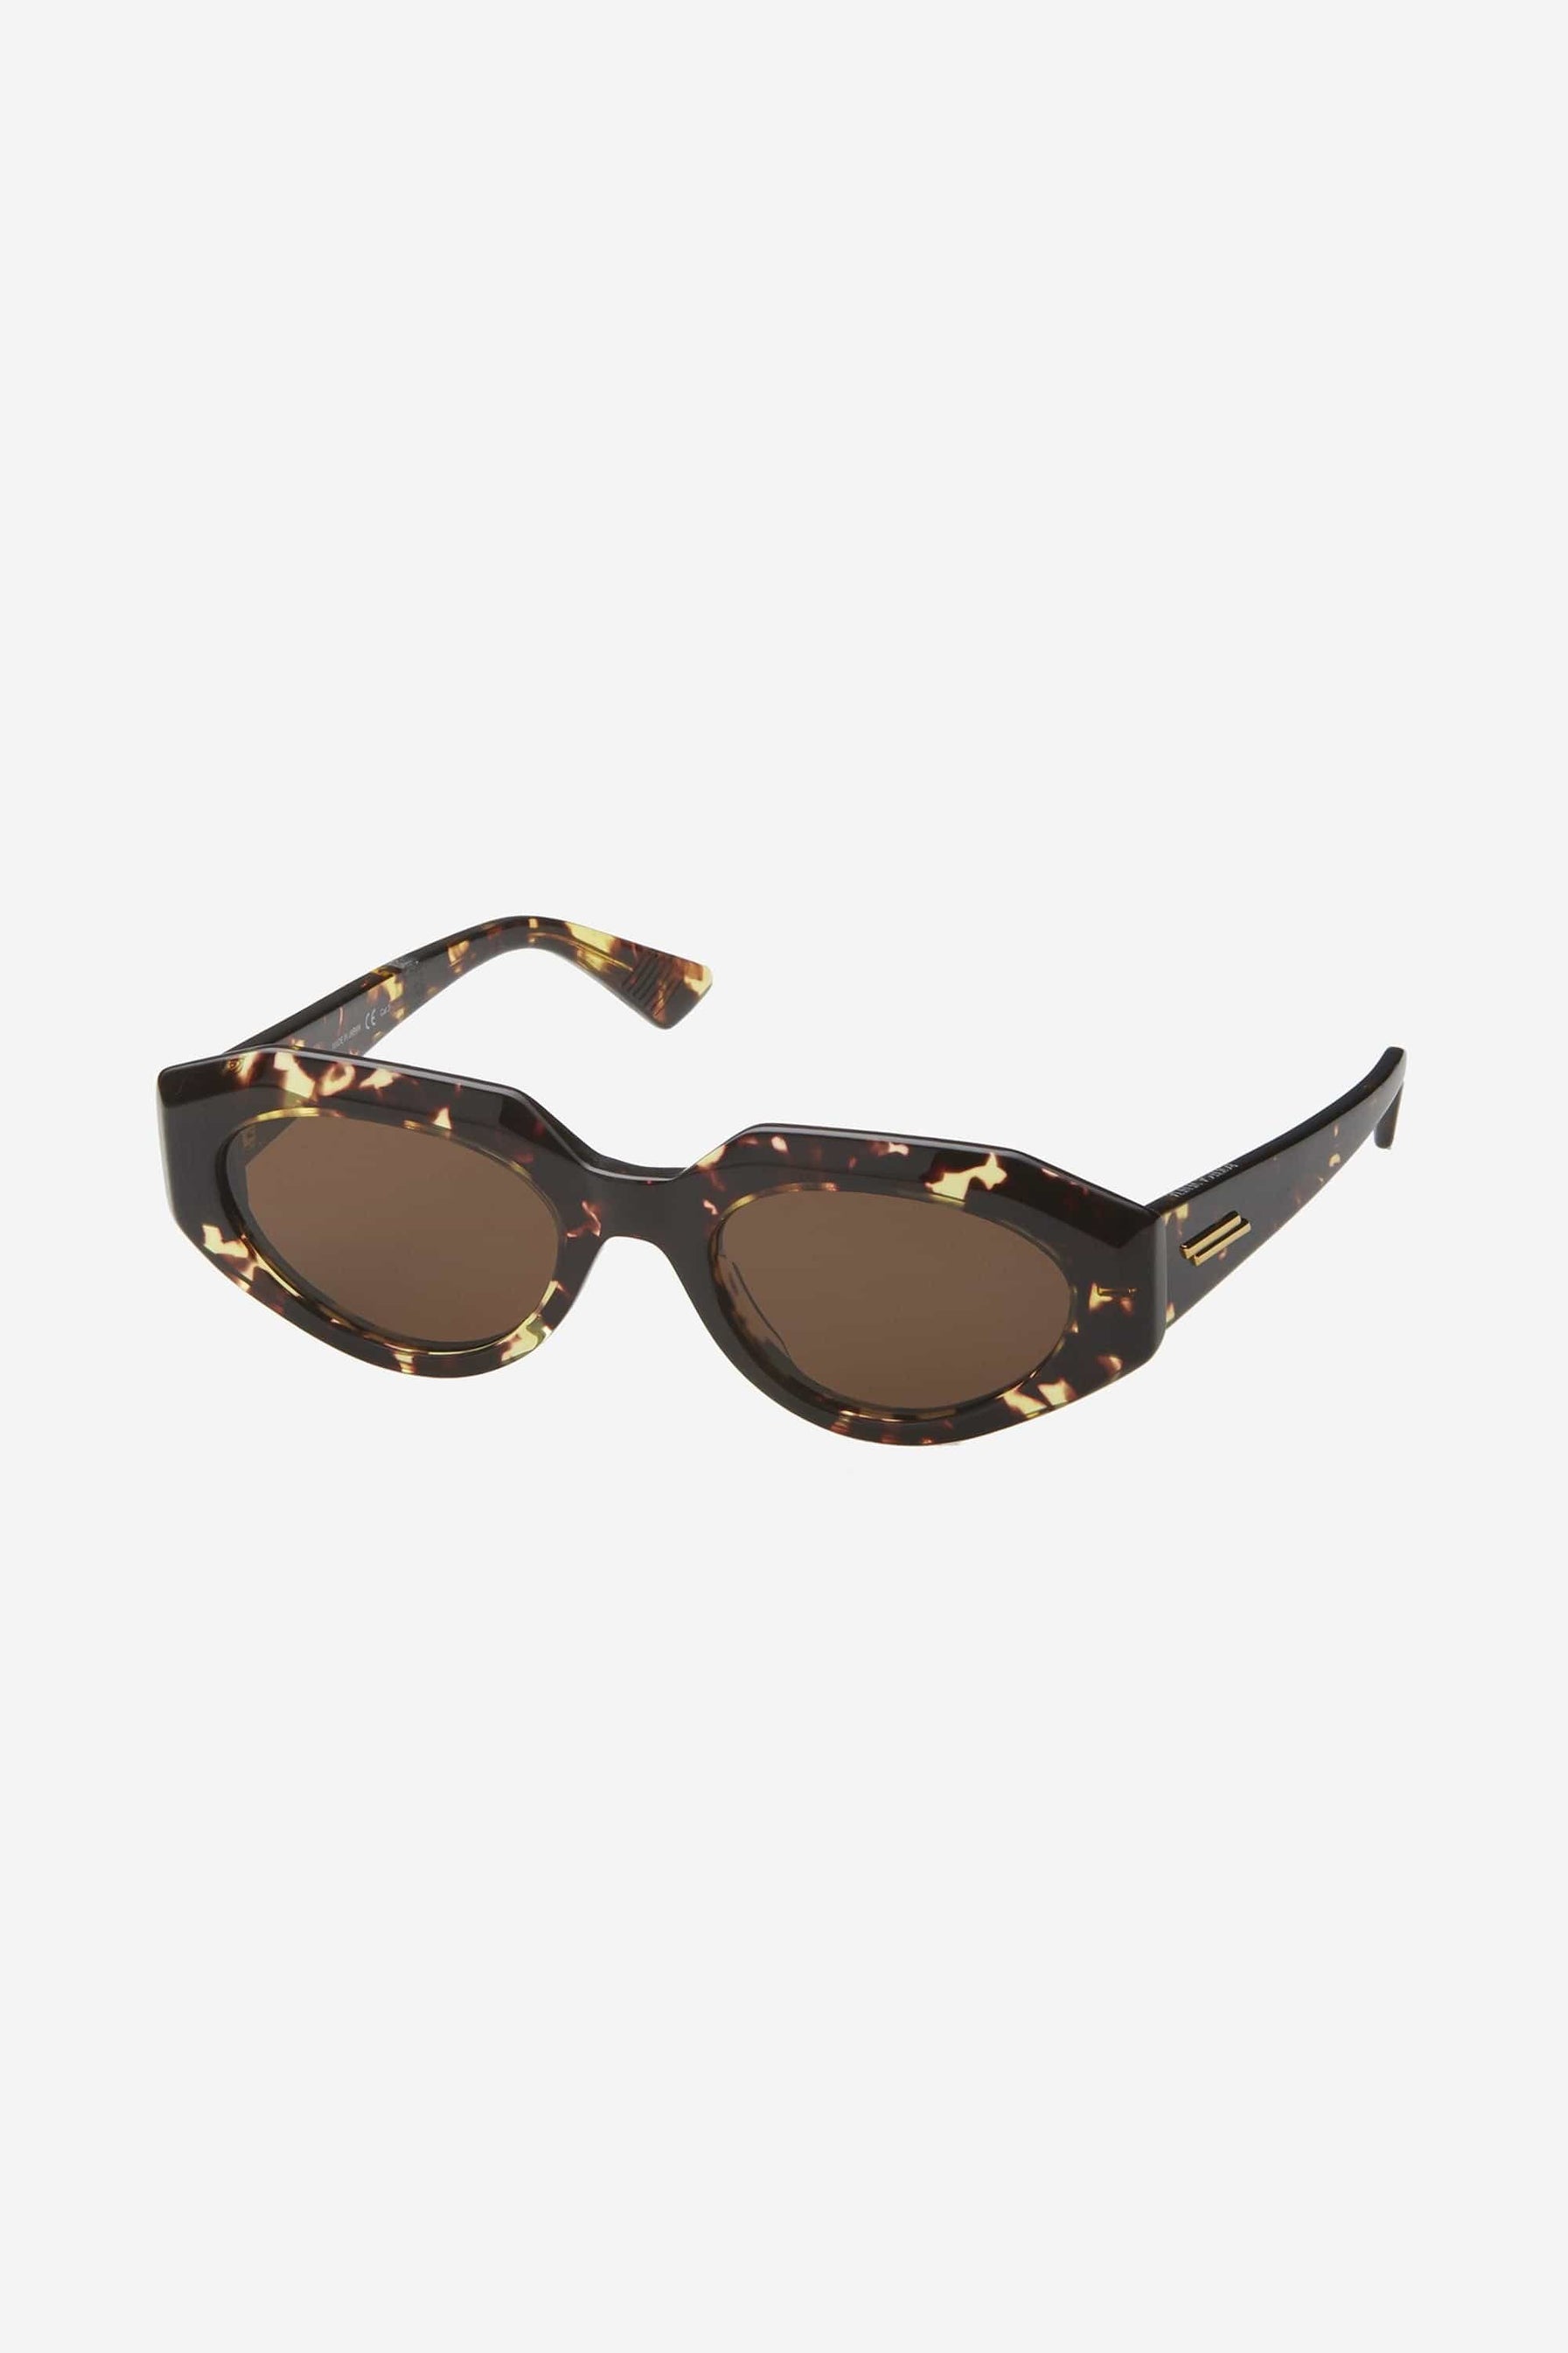 Bottega Veneta bold oval femenine havana sunglasses - Eyewear Club